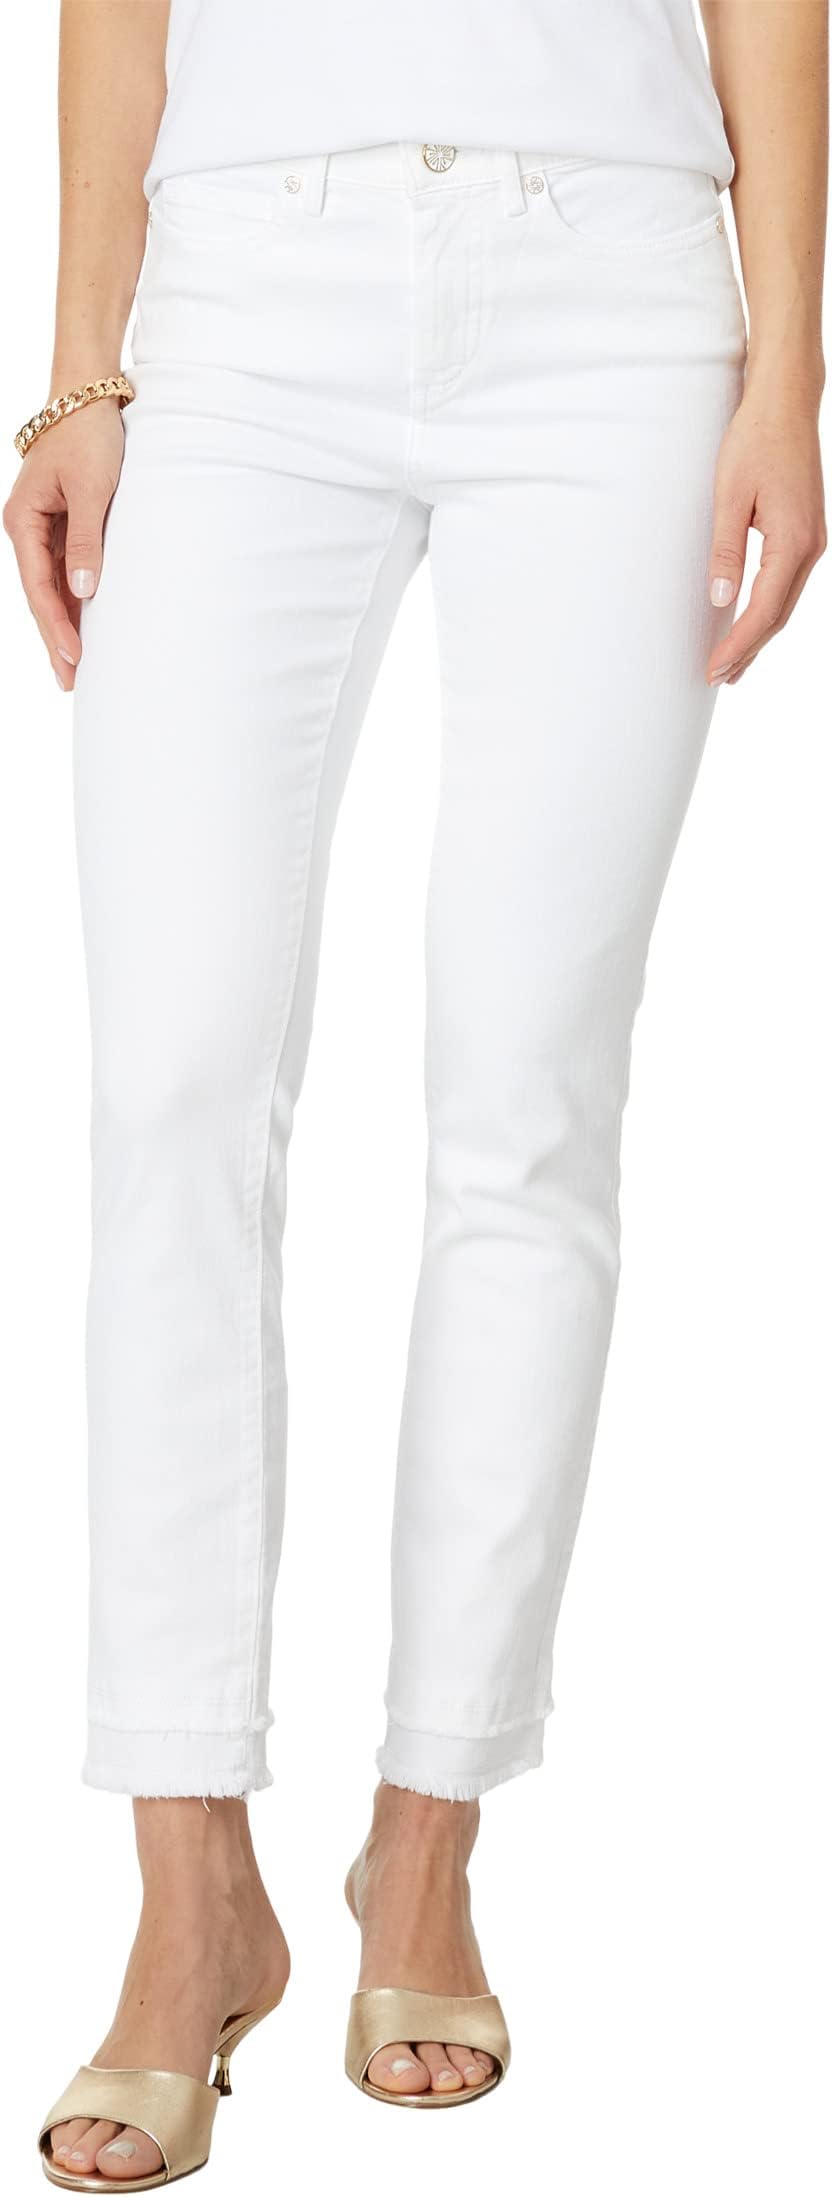 Джинсы South Ocean High-Rise Skinny Jeans in Resort White Lilly Pulitzer, цвет Resort White